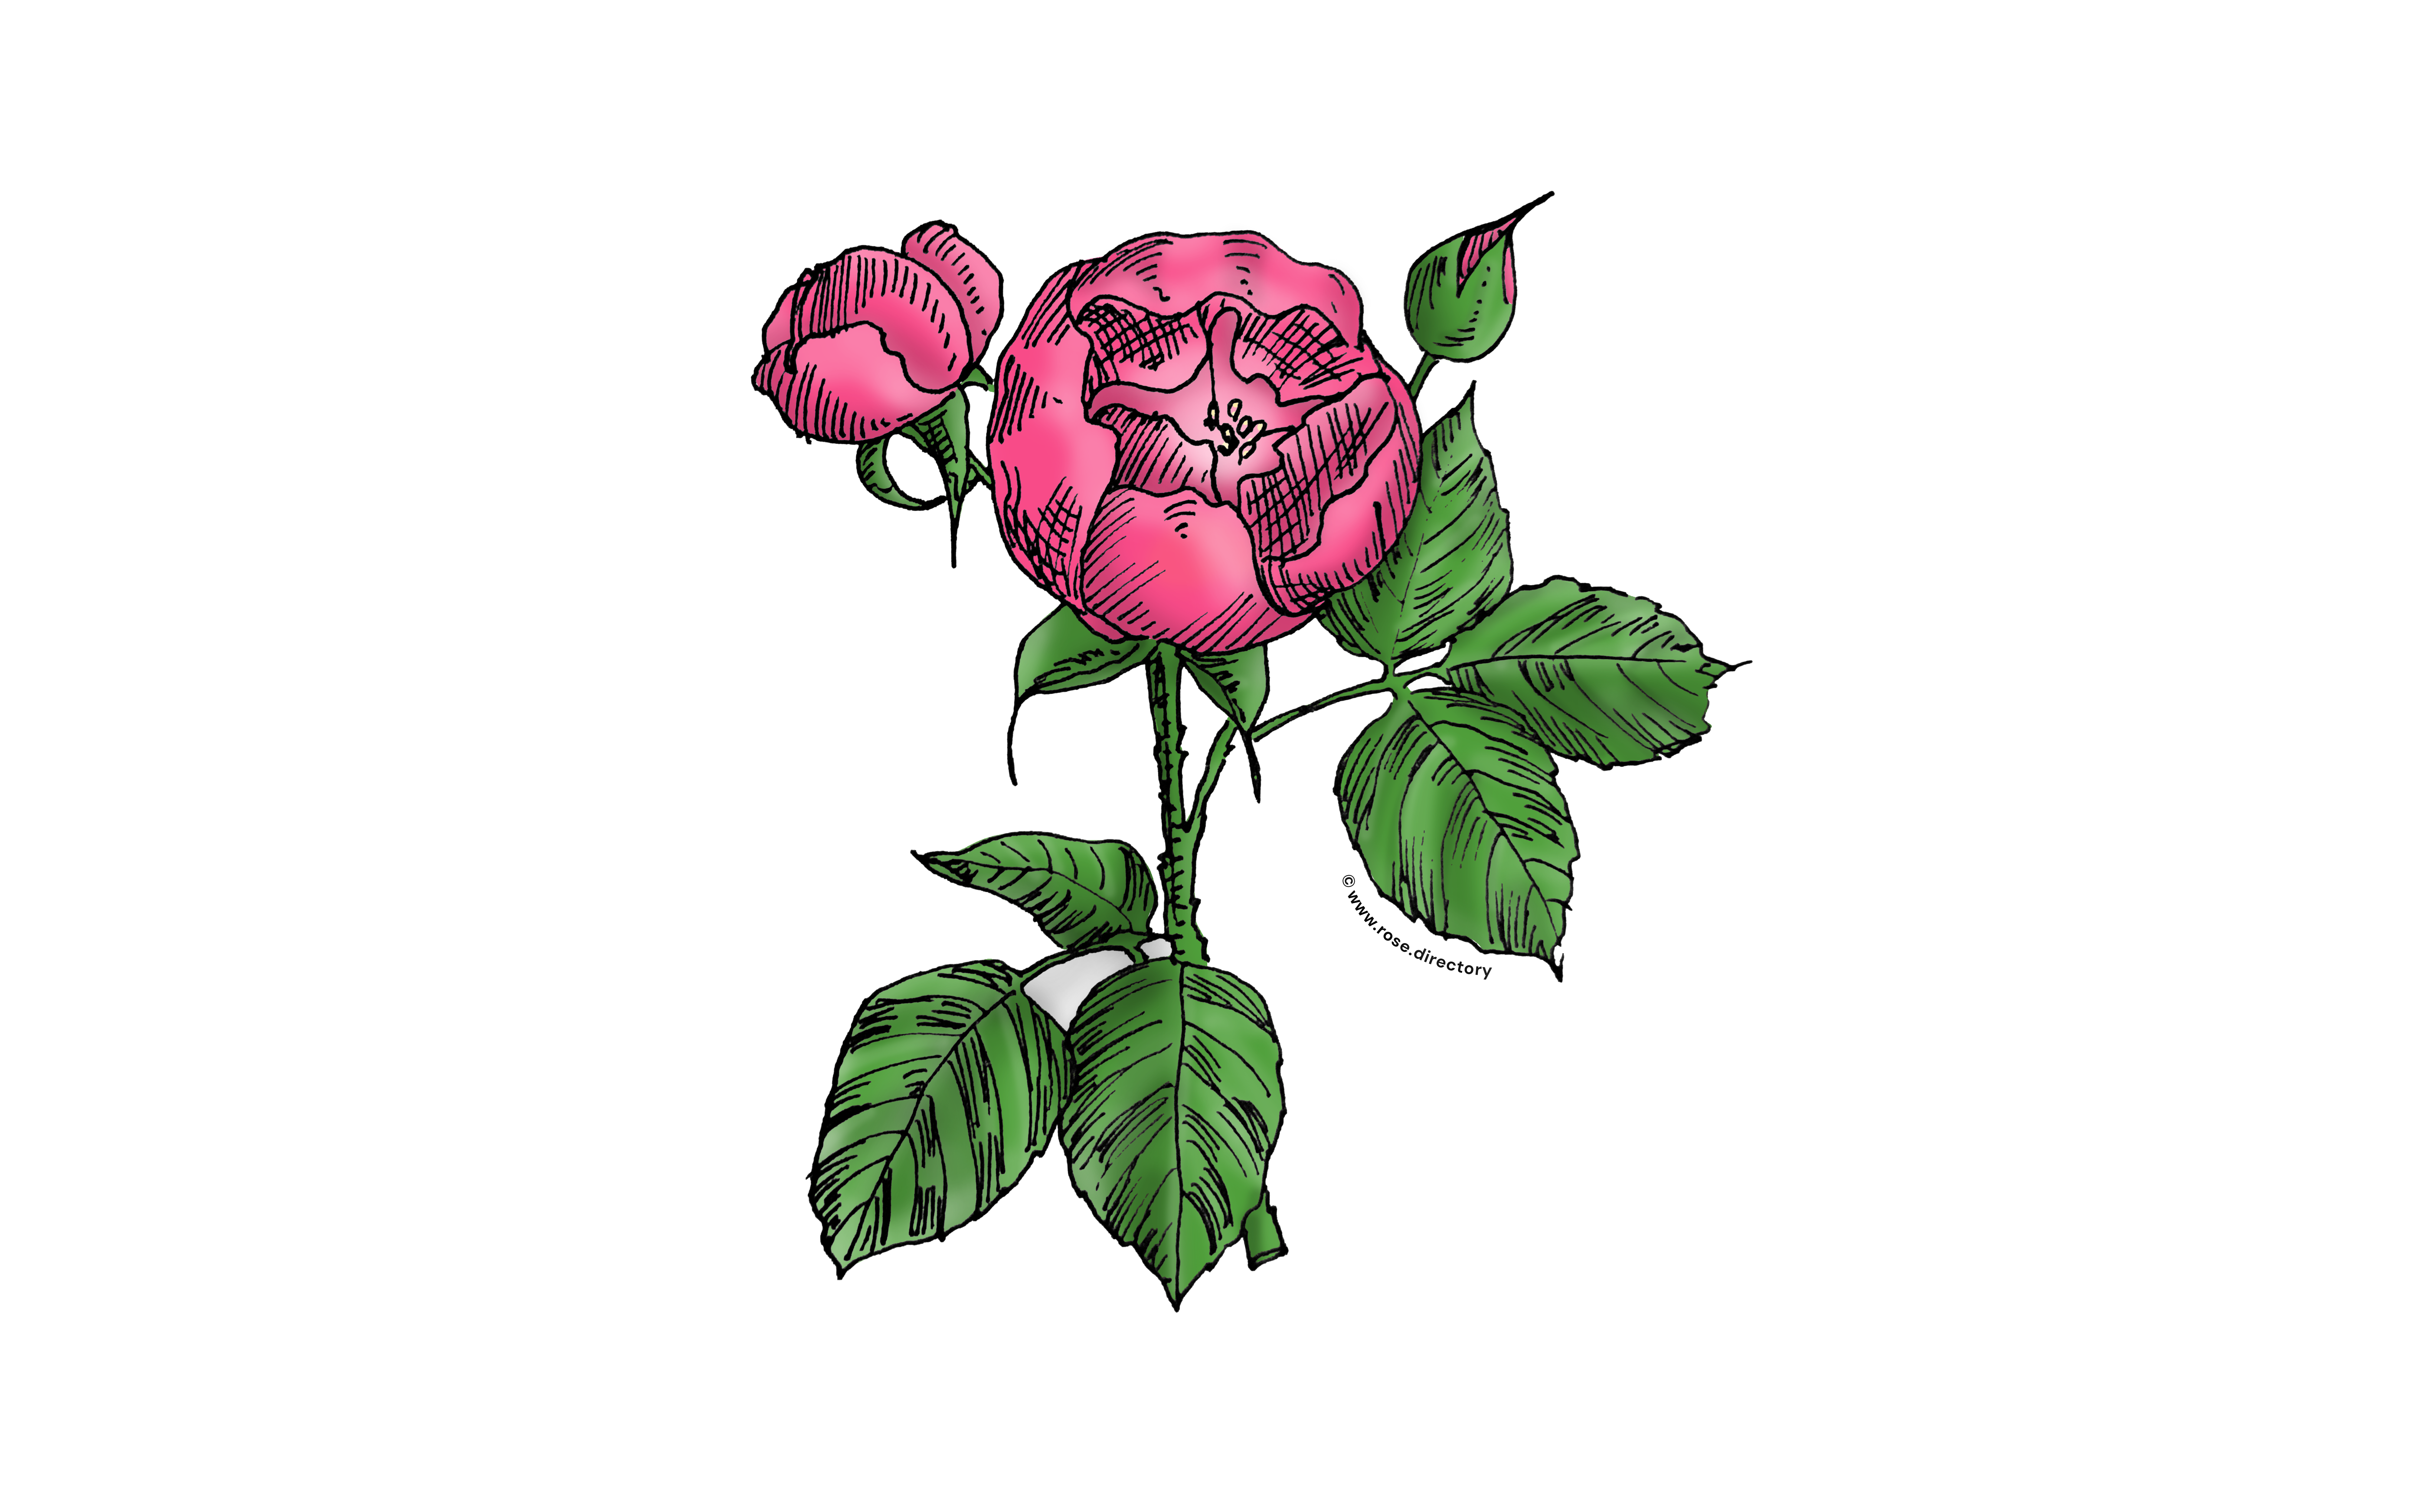 Mid Pink Globular Rose Bloom Semi-Double 8-15 Petals In 2 Rows